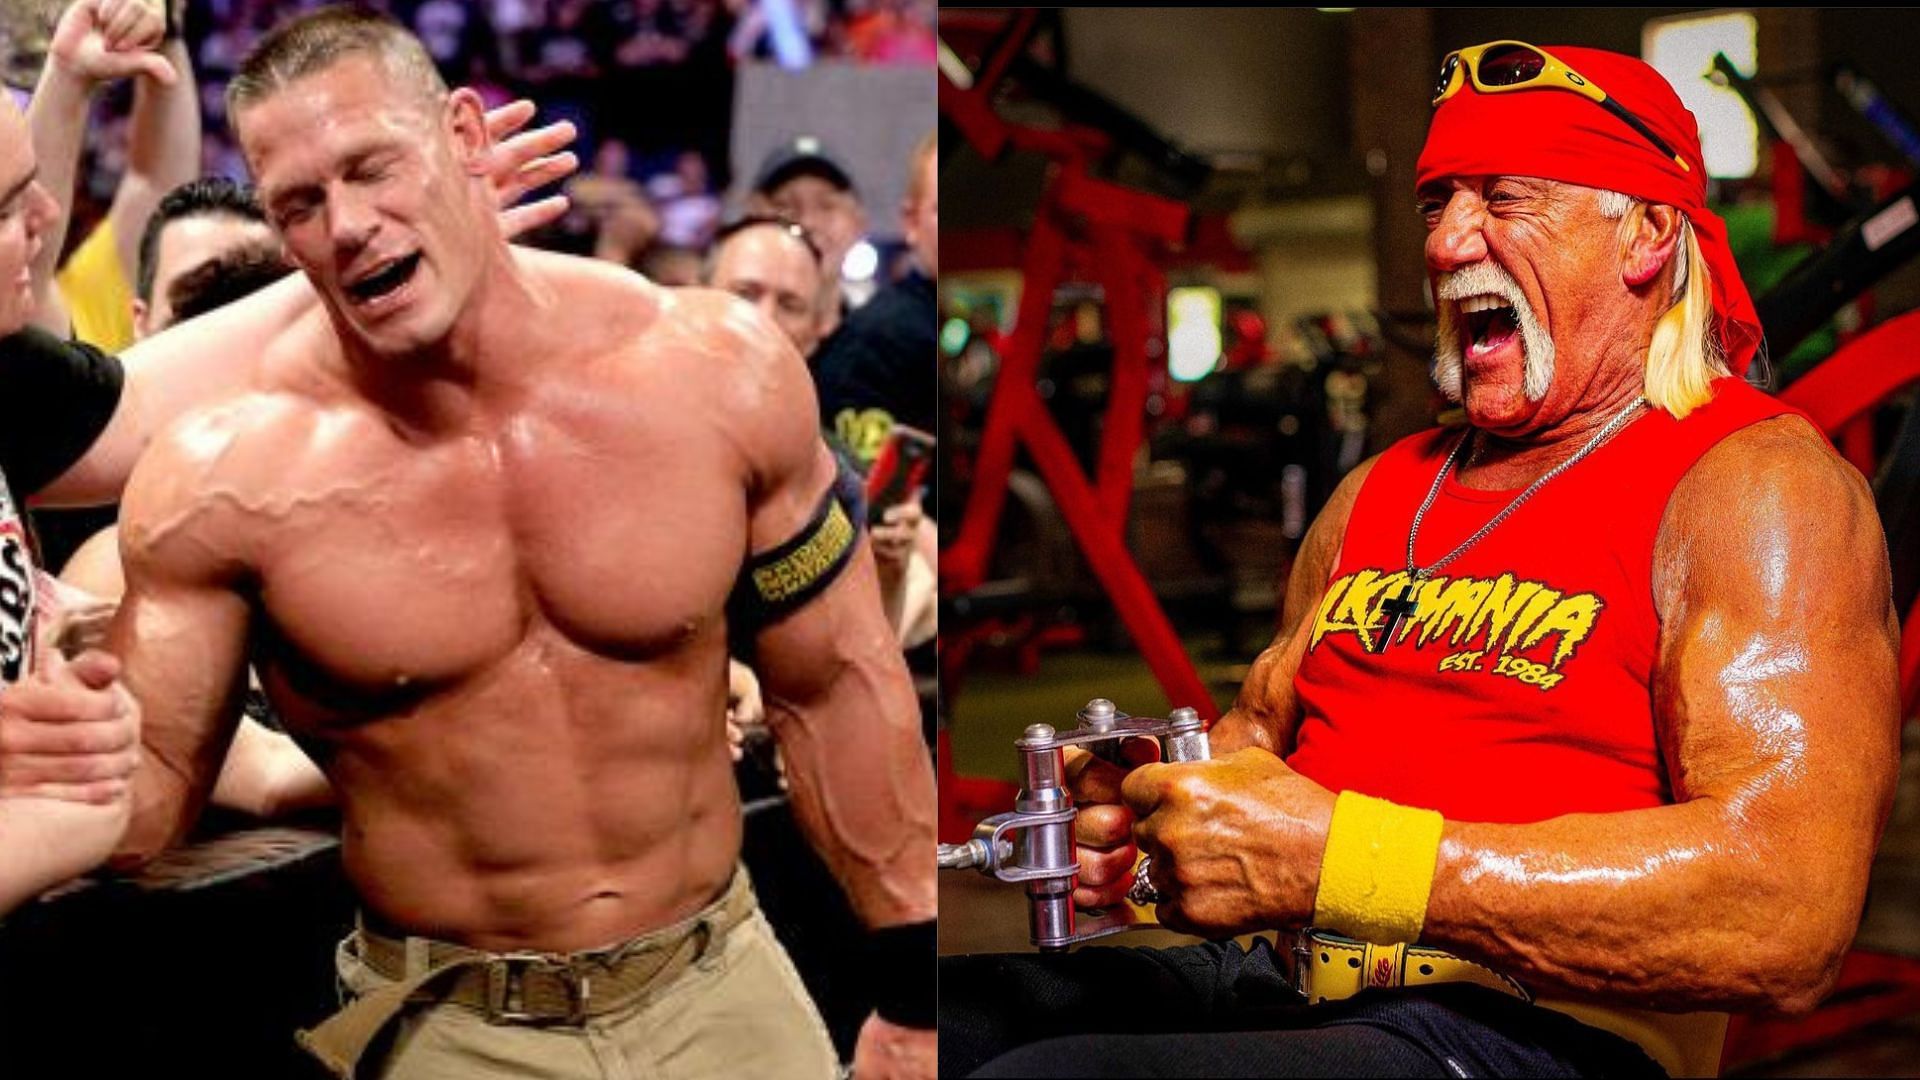 Comparing the size of John Cena and Hulk Hogan